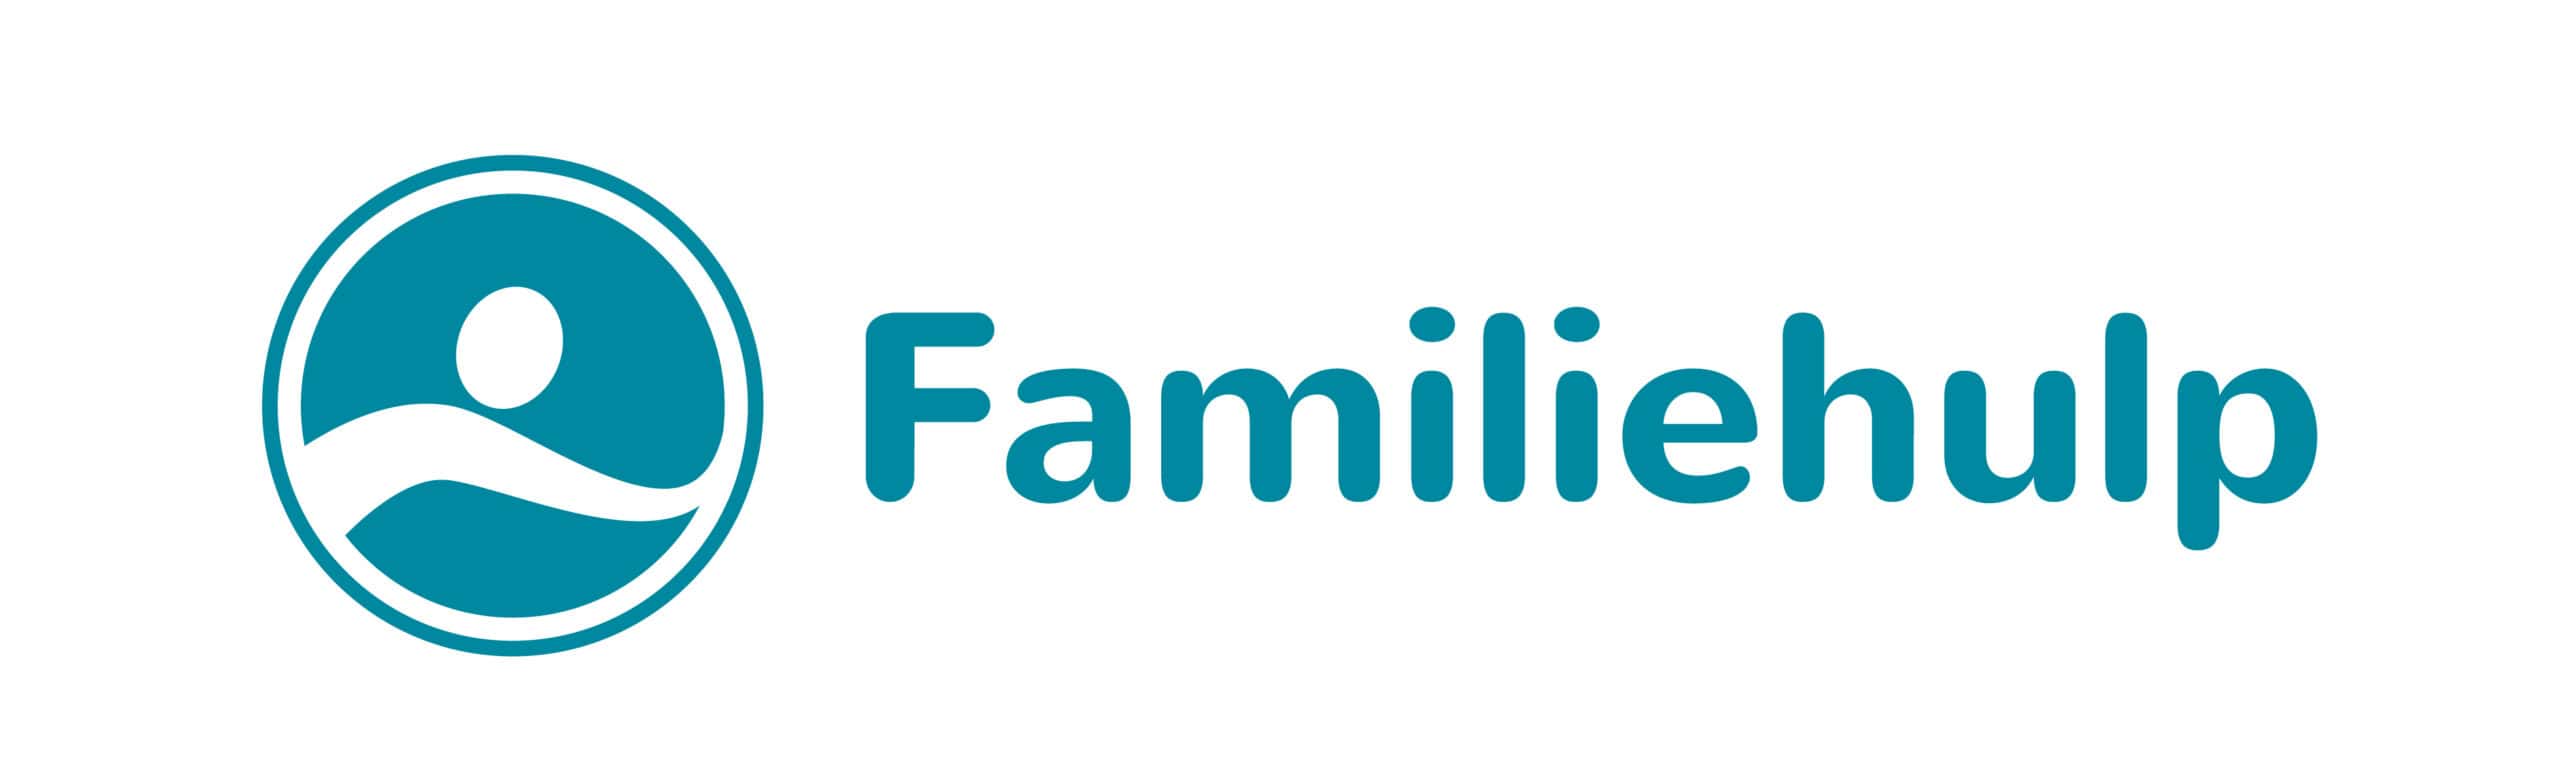 logo Familiehulp scaled